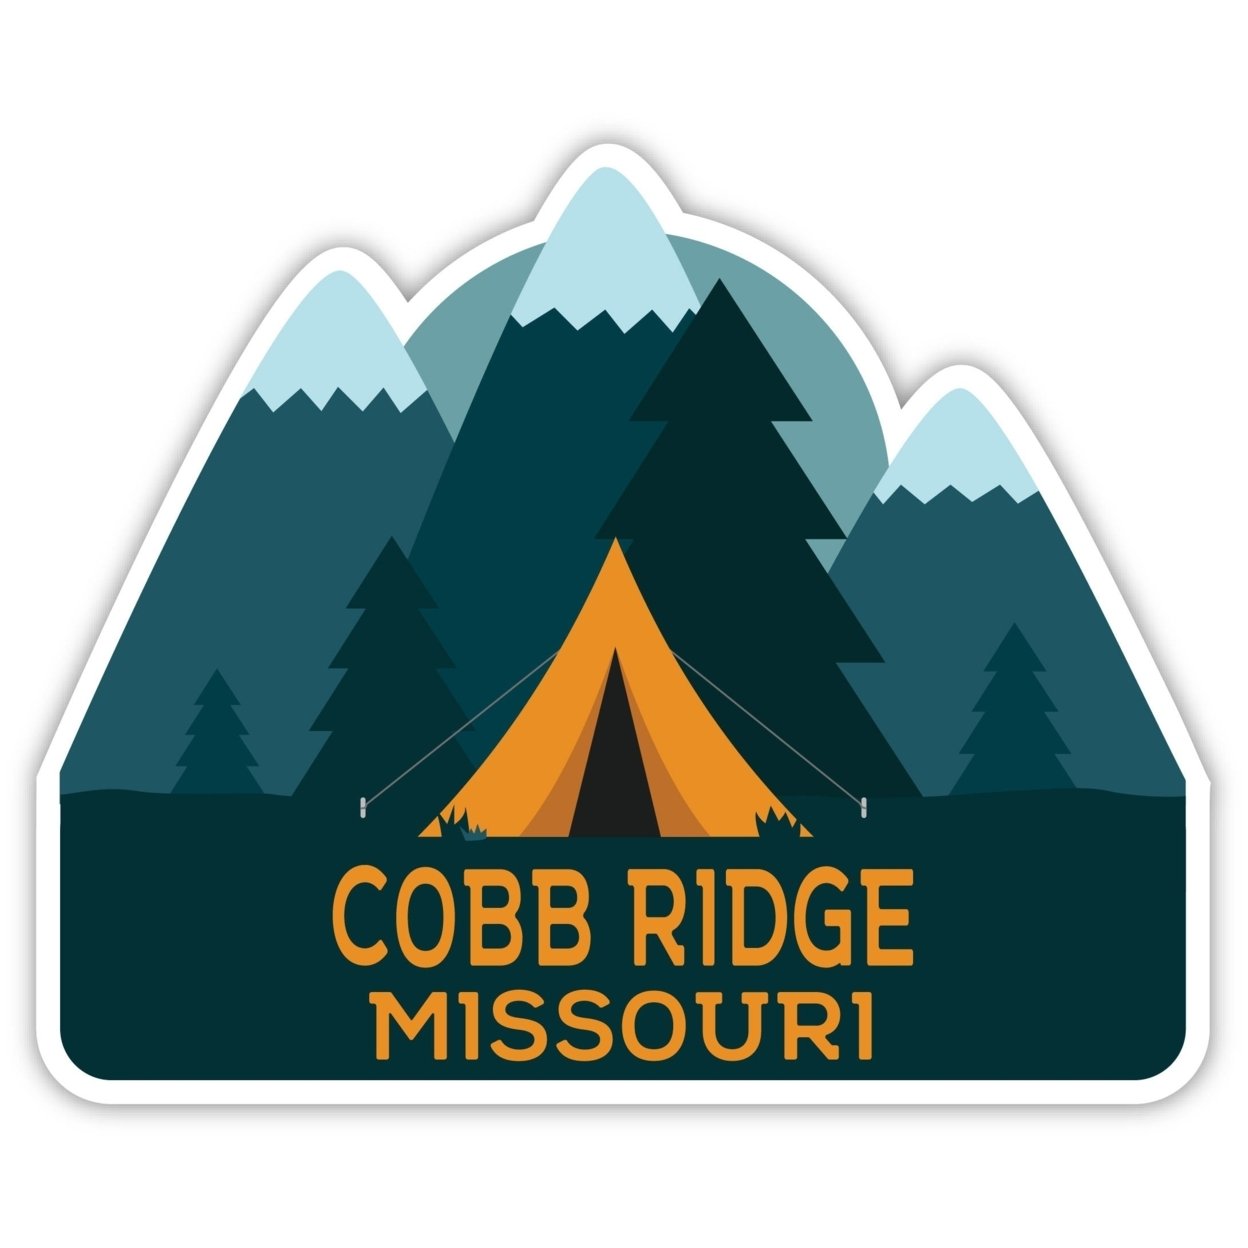 Cobb Ridge Missouri Souvenir Decorative Stickers (Choose Theme And Size) - 4-Pack, 4-Inch, Tent